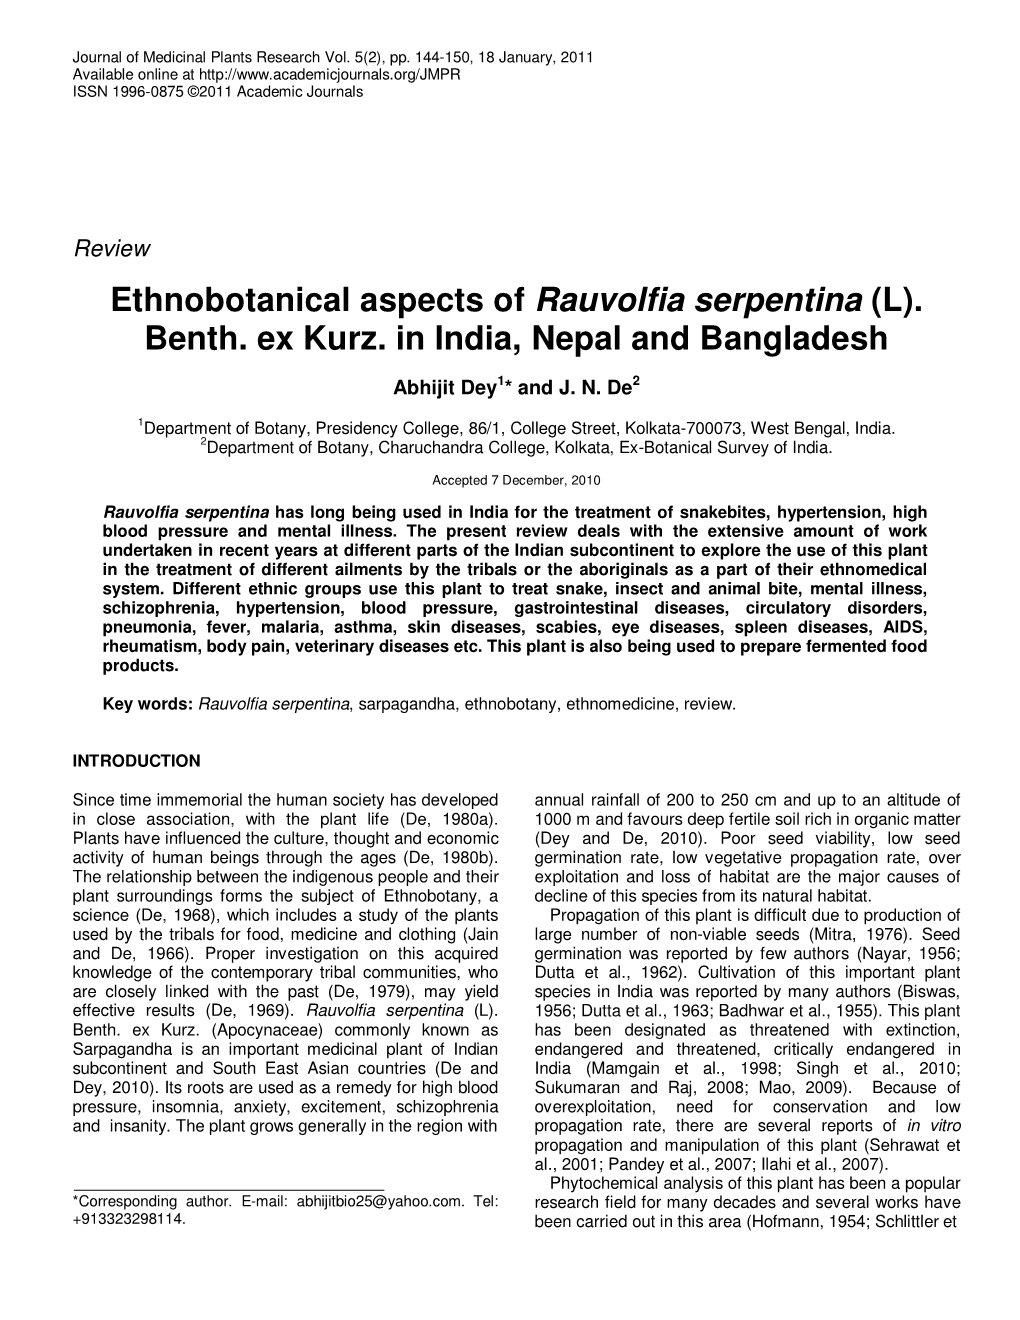 Ethnobotanical Aspects of Rauvolfia Serpentina (L)